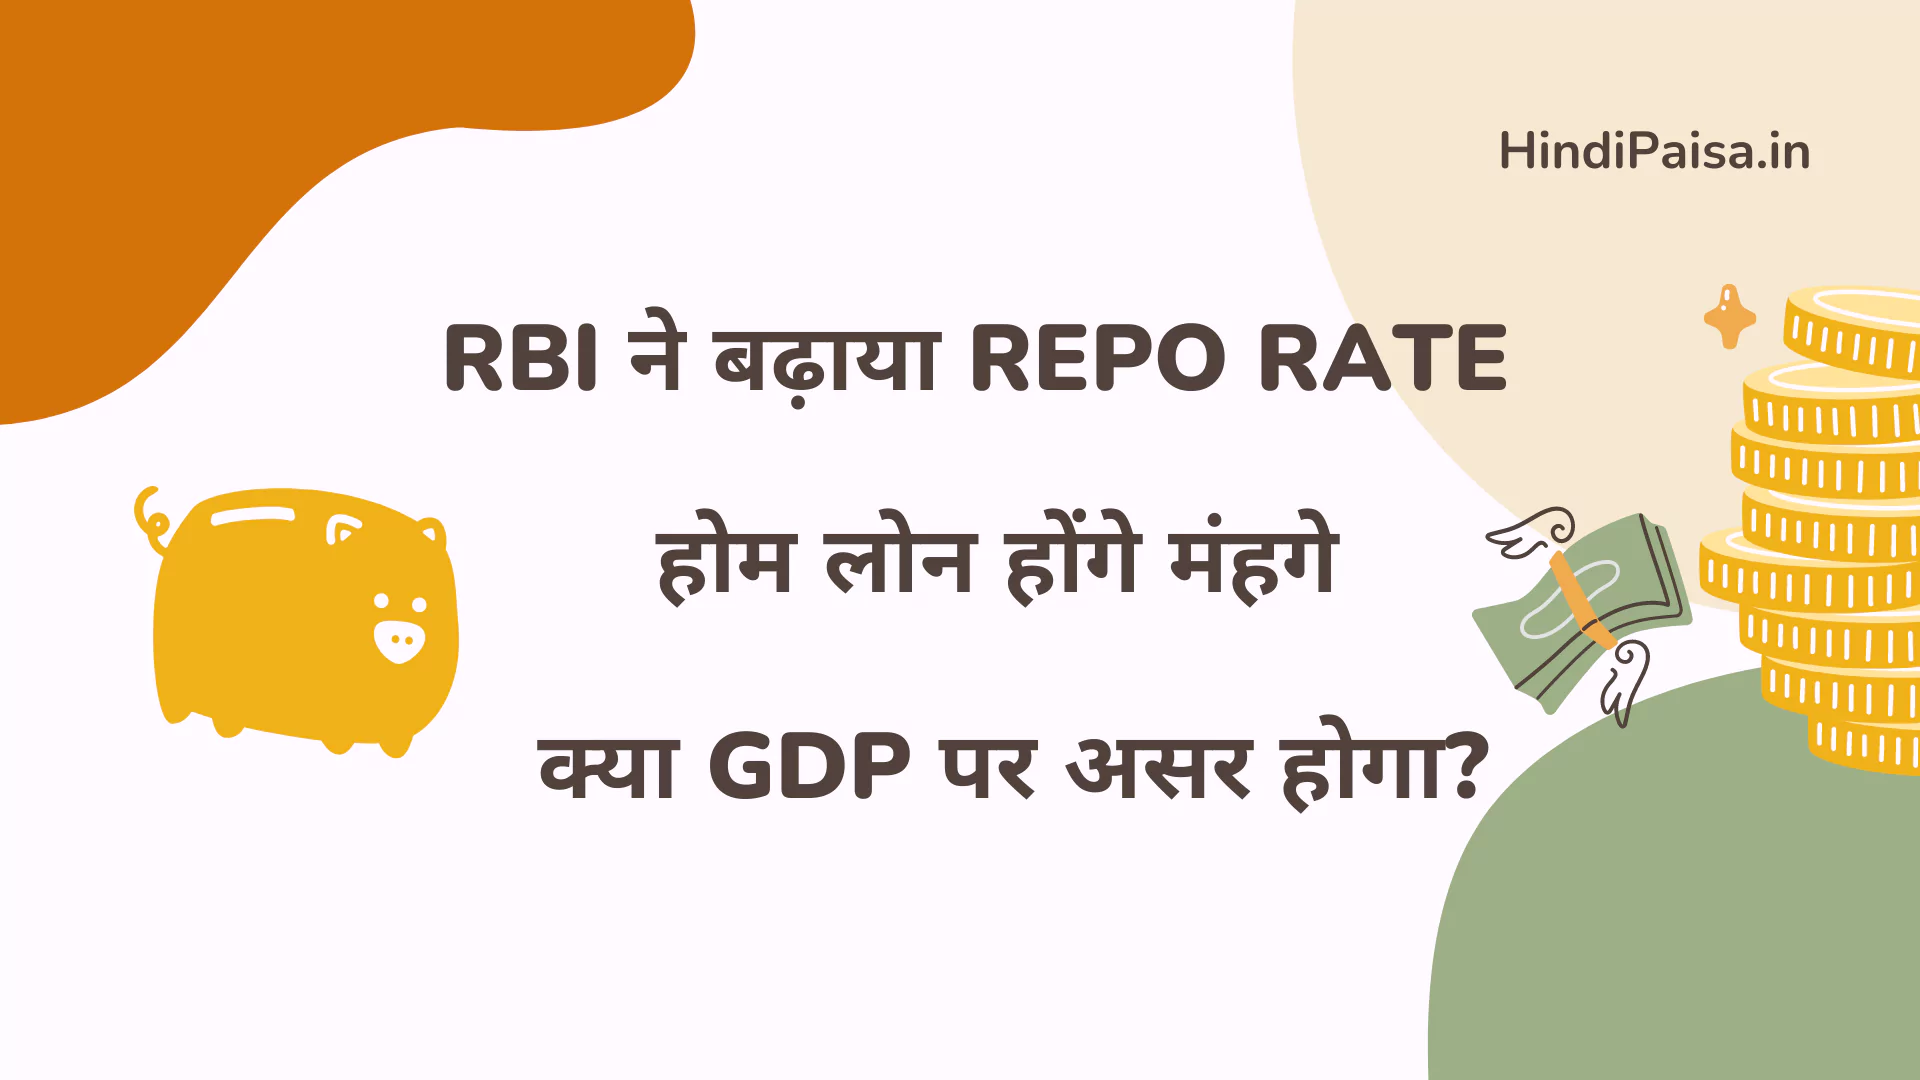 RBI ने बढ़ाया REPO RATE